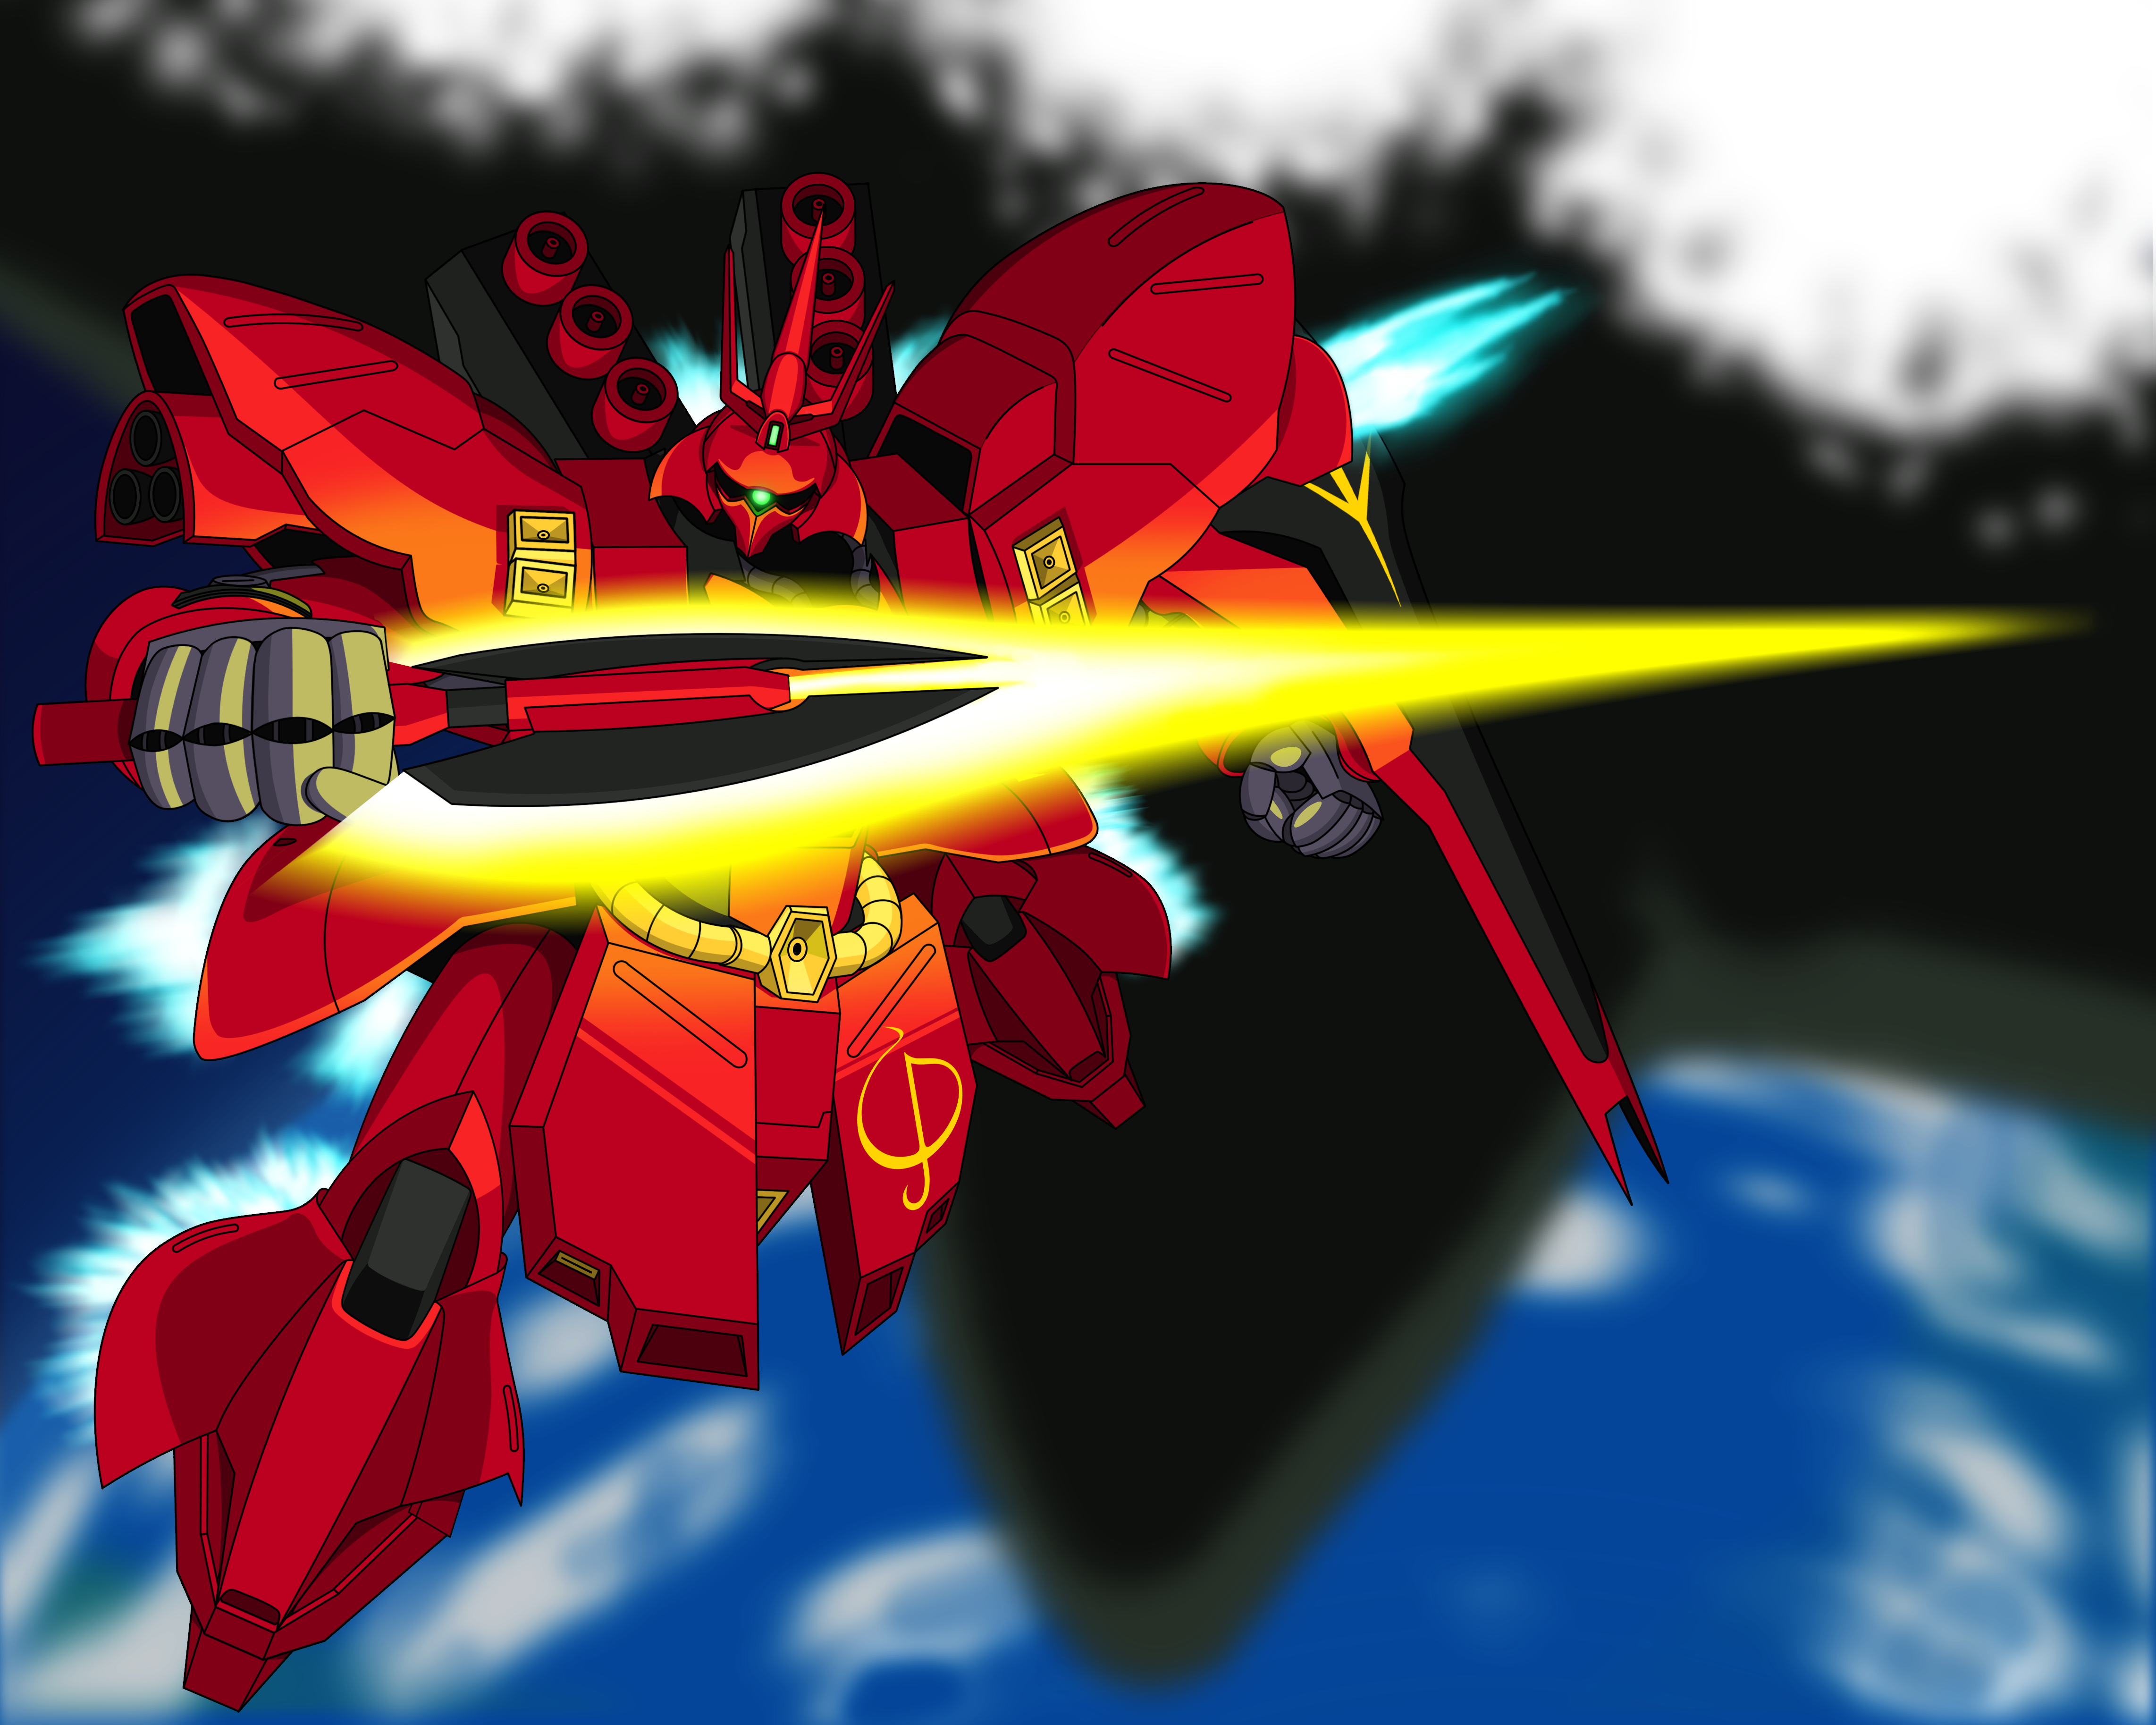 Anime Mechs Mobile Suit Gundam Chars Counterattack Sazabi Mobile Suit Artwork Digital Art Fan Art 4568x3654